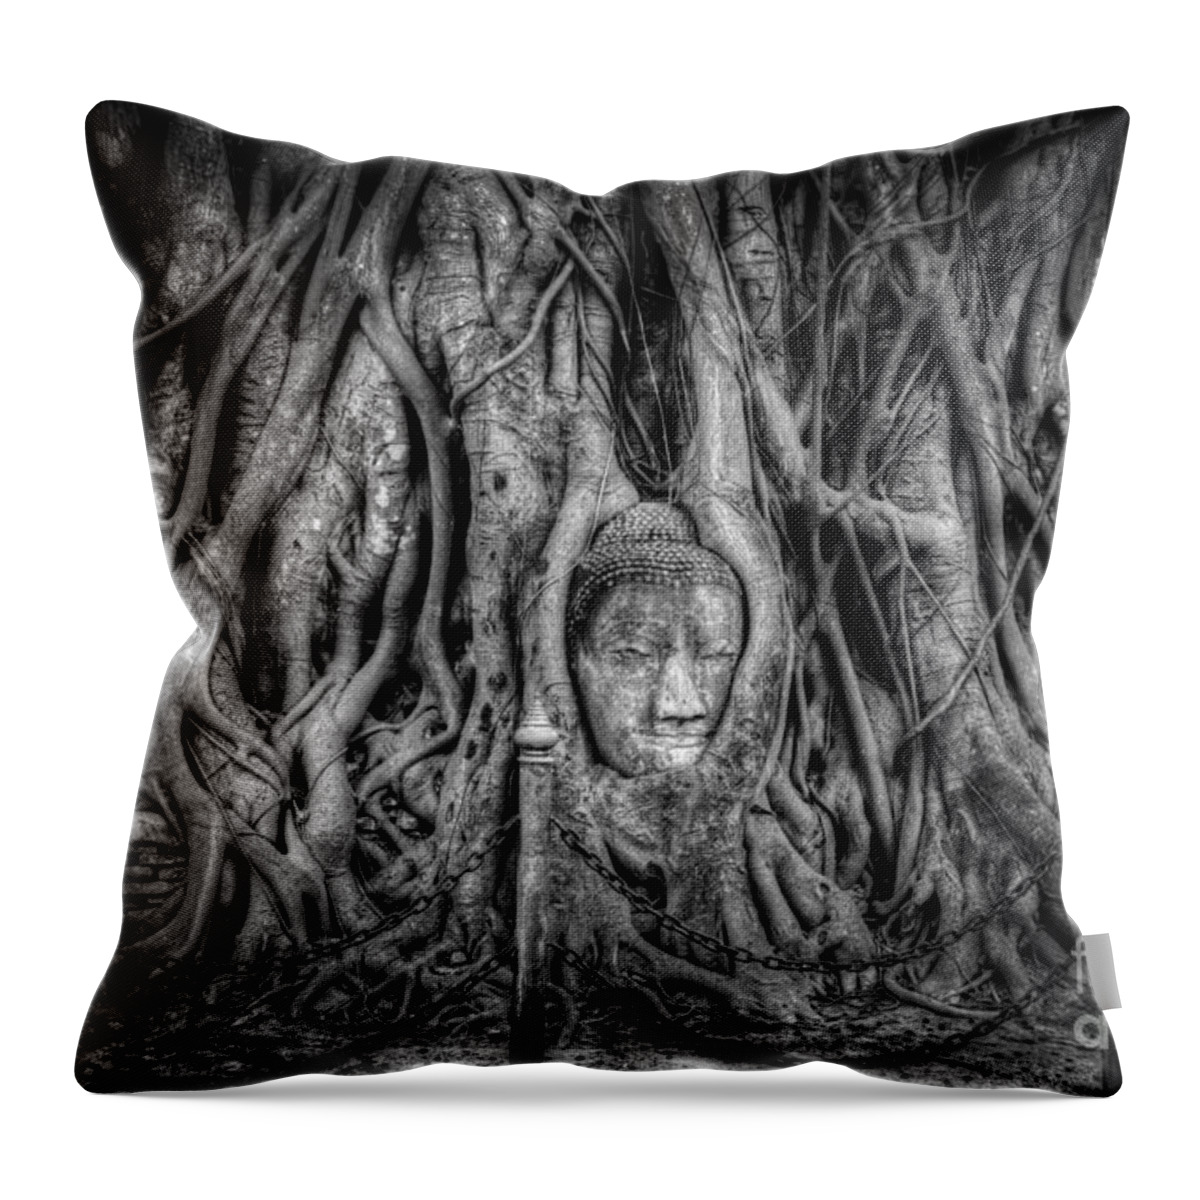 Ayutthaya Throw Pillow featuring the photograph Banyan Tree Buddha #1 by Adrian Evans